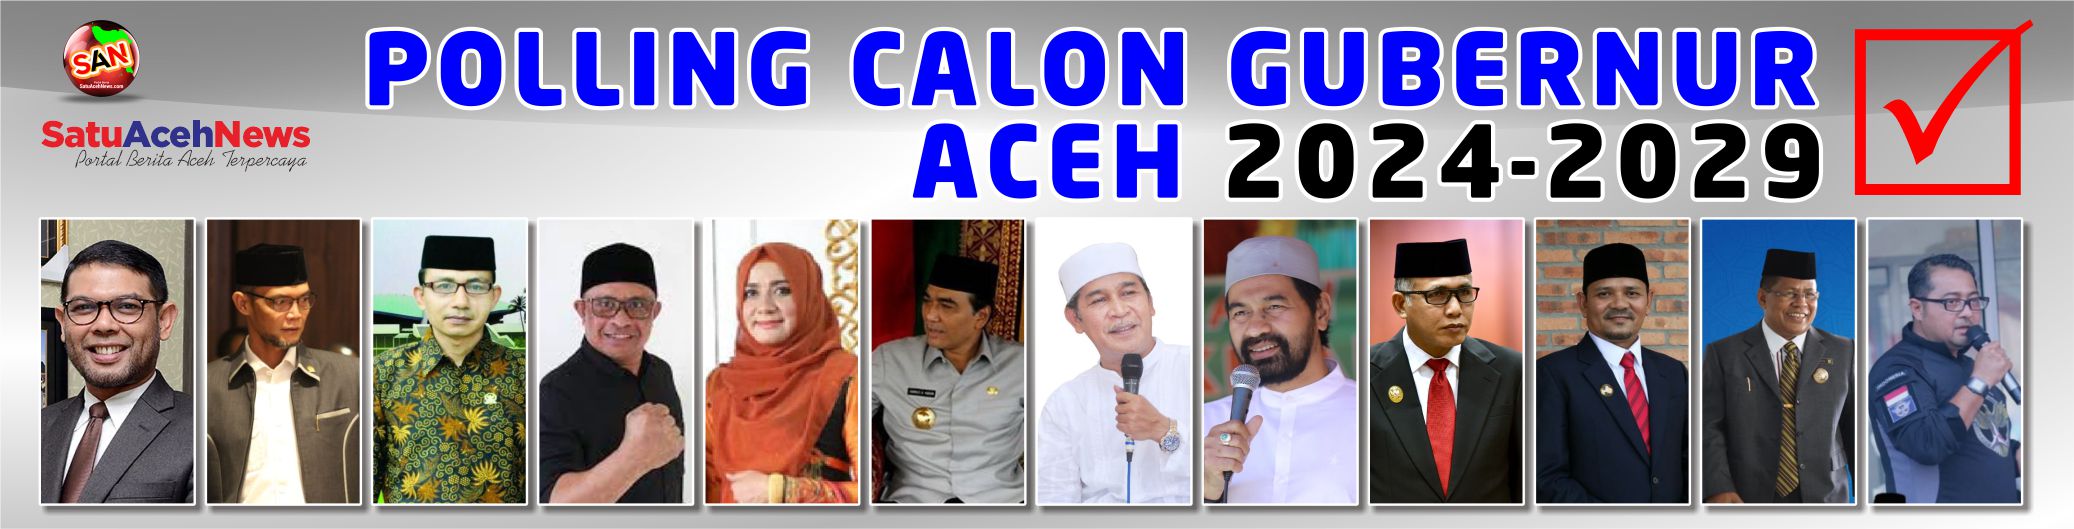 Polling Survey Gubernur Aceh